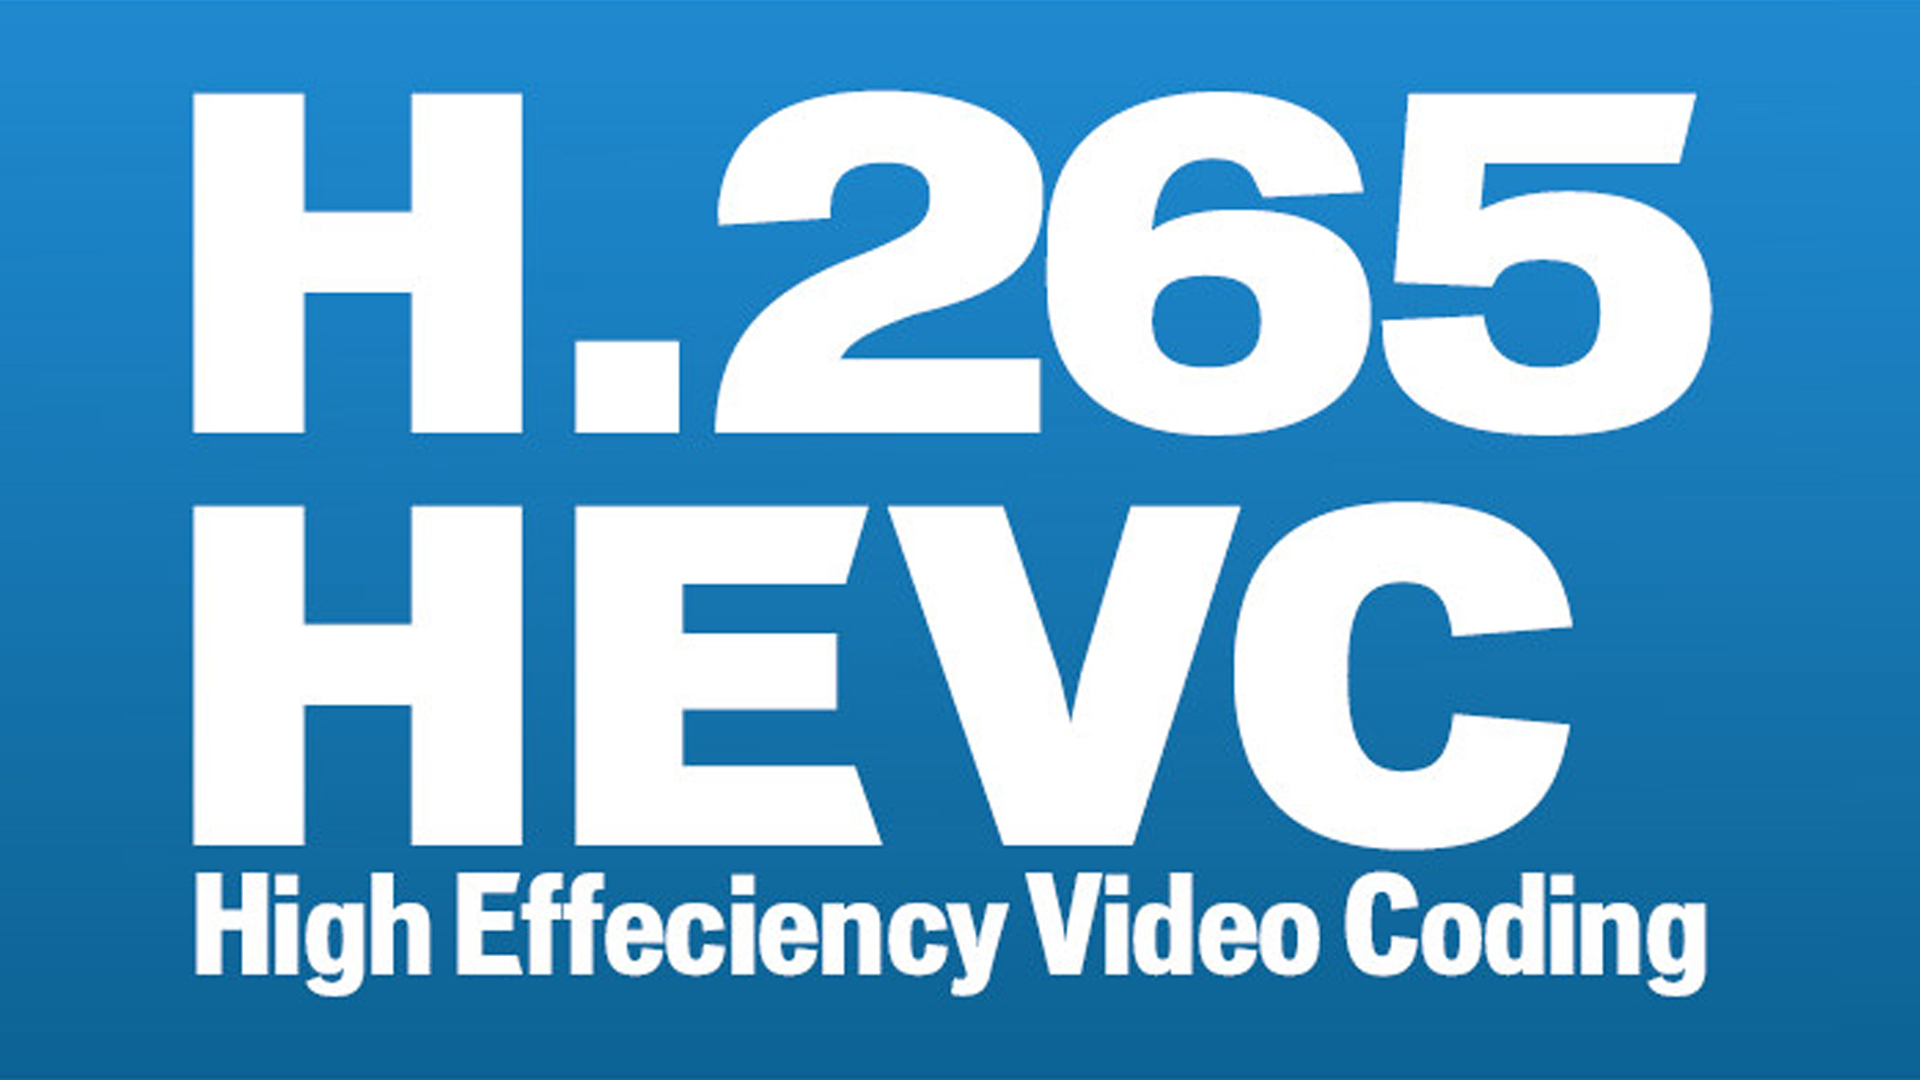 Kombinuotas imtuvas Zgemma H8.2H DVB-S2X + DVB-T2 / C H.265 HEVC